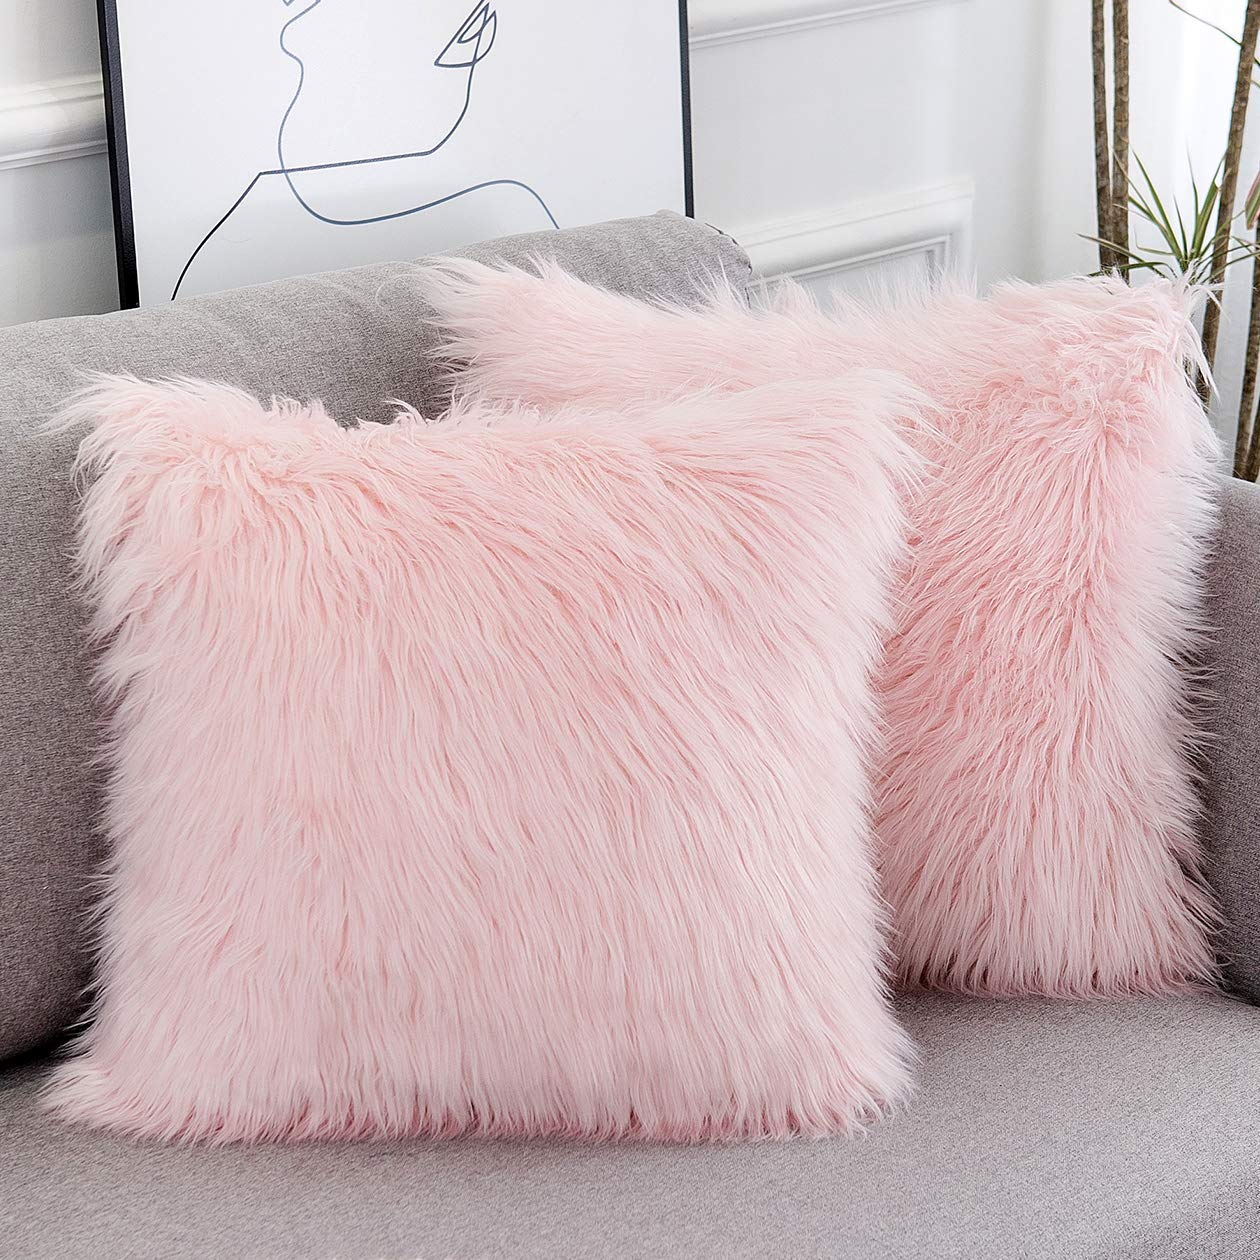 Pink Fluffy Pillow Inovhara Faux Fur Merino Style Square Fuzzy Decor Cushion Case